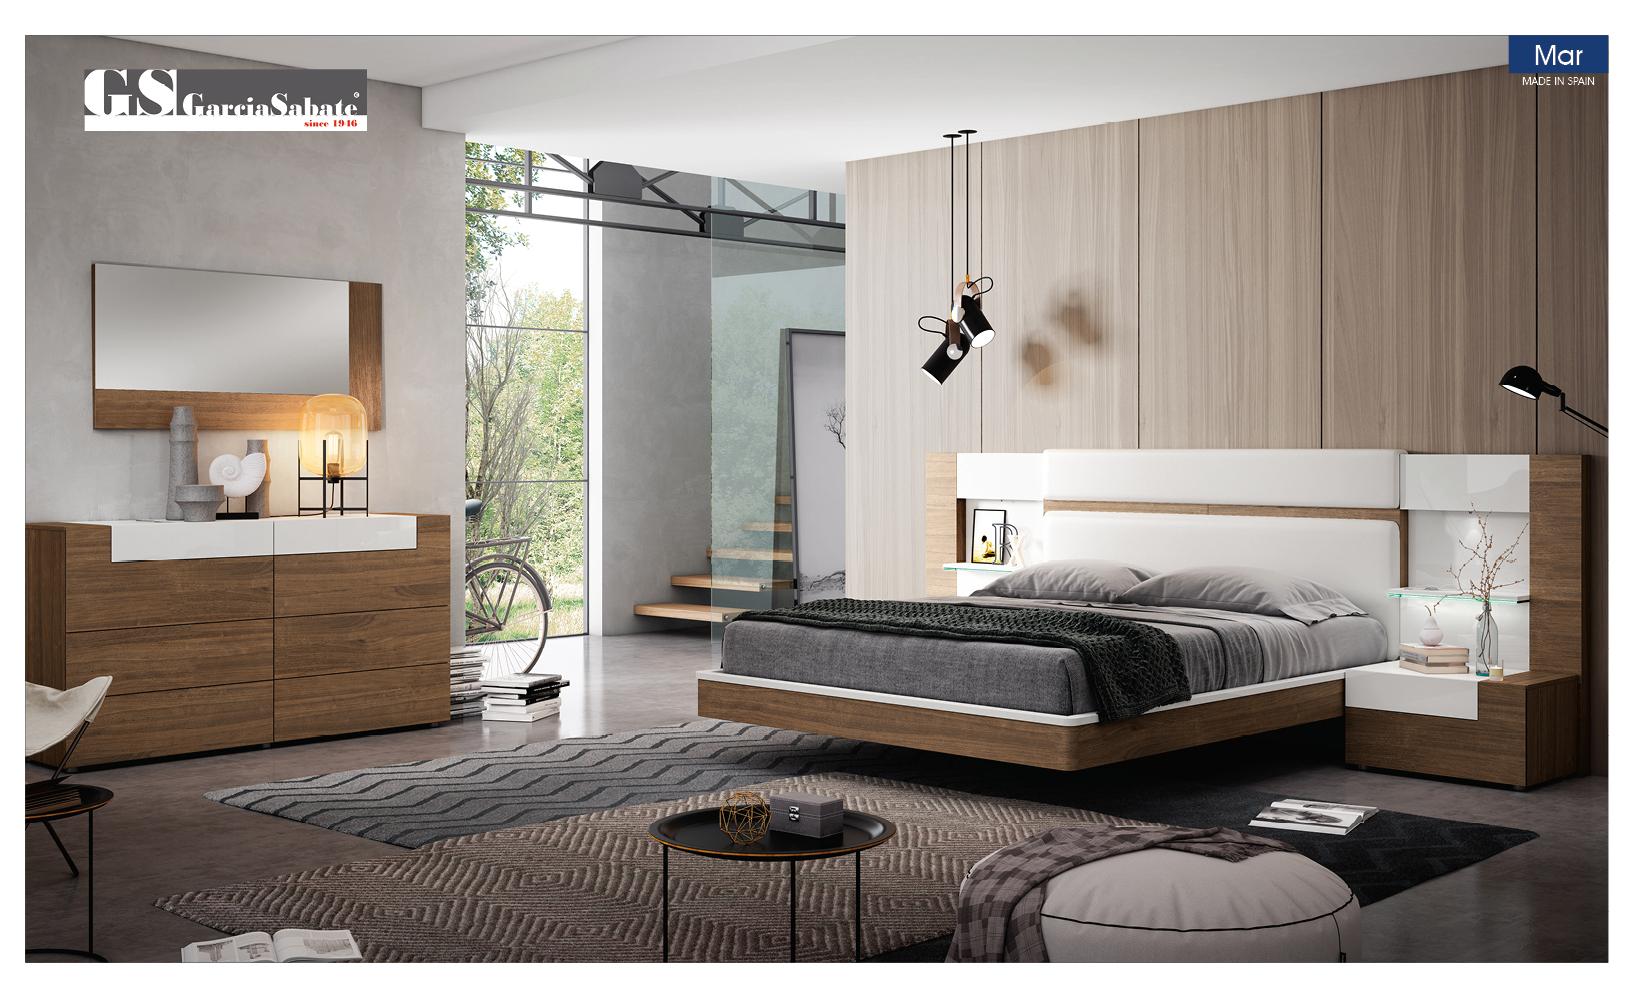 

    
Walnut  & White Finish King Bedroom 5Pcs w/Double Dresser Made in Spain ESF Mar
